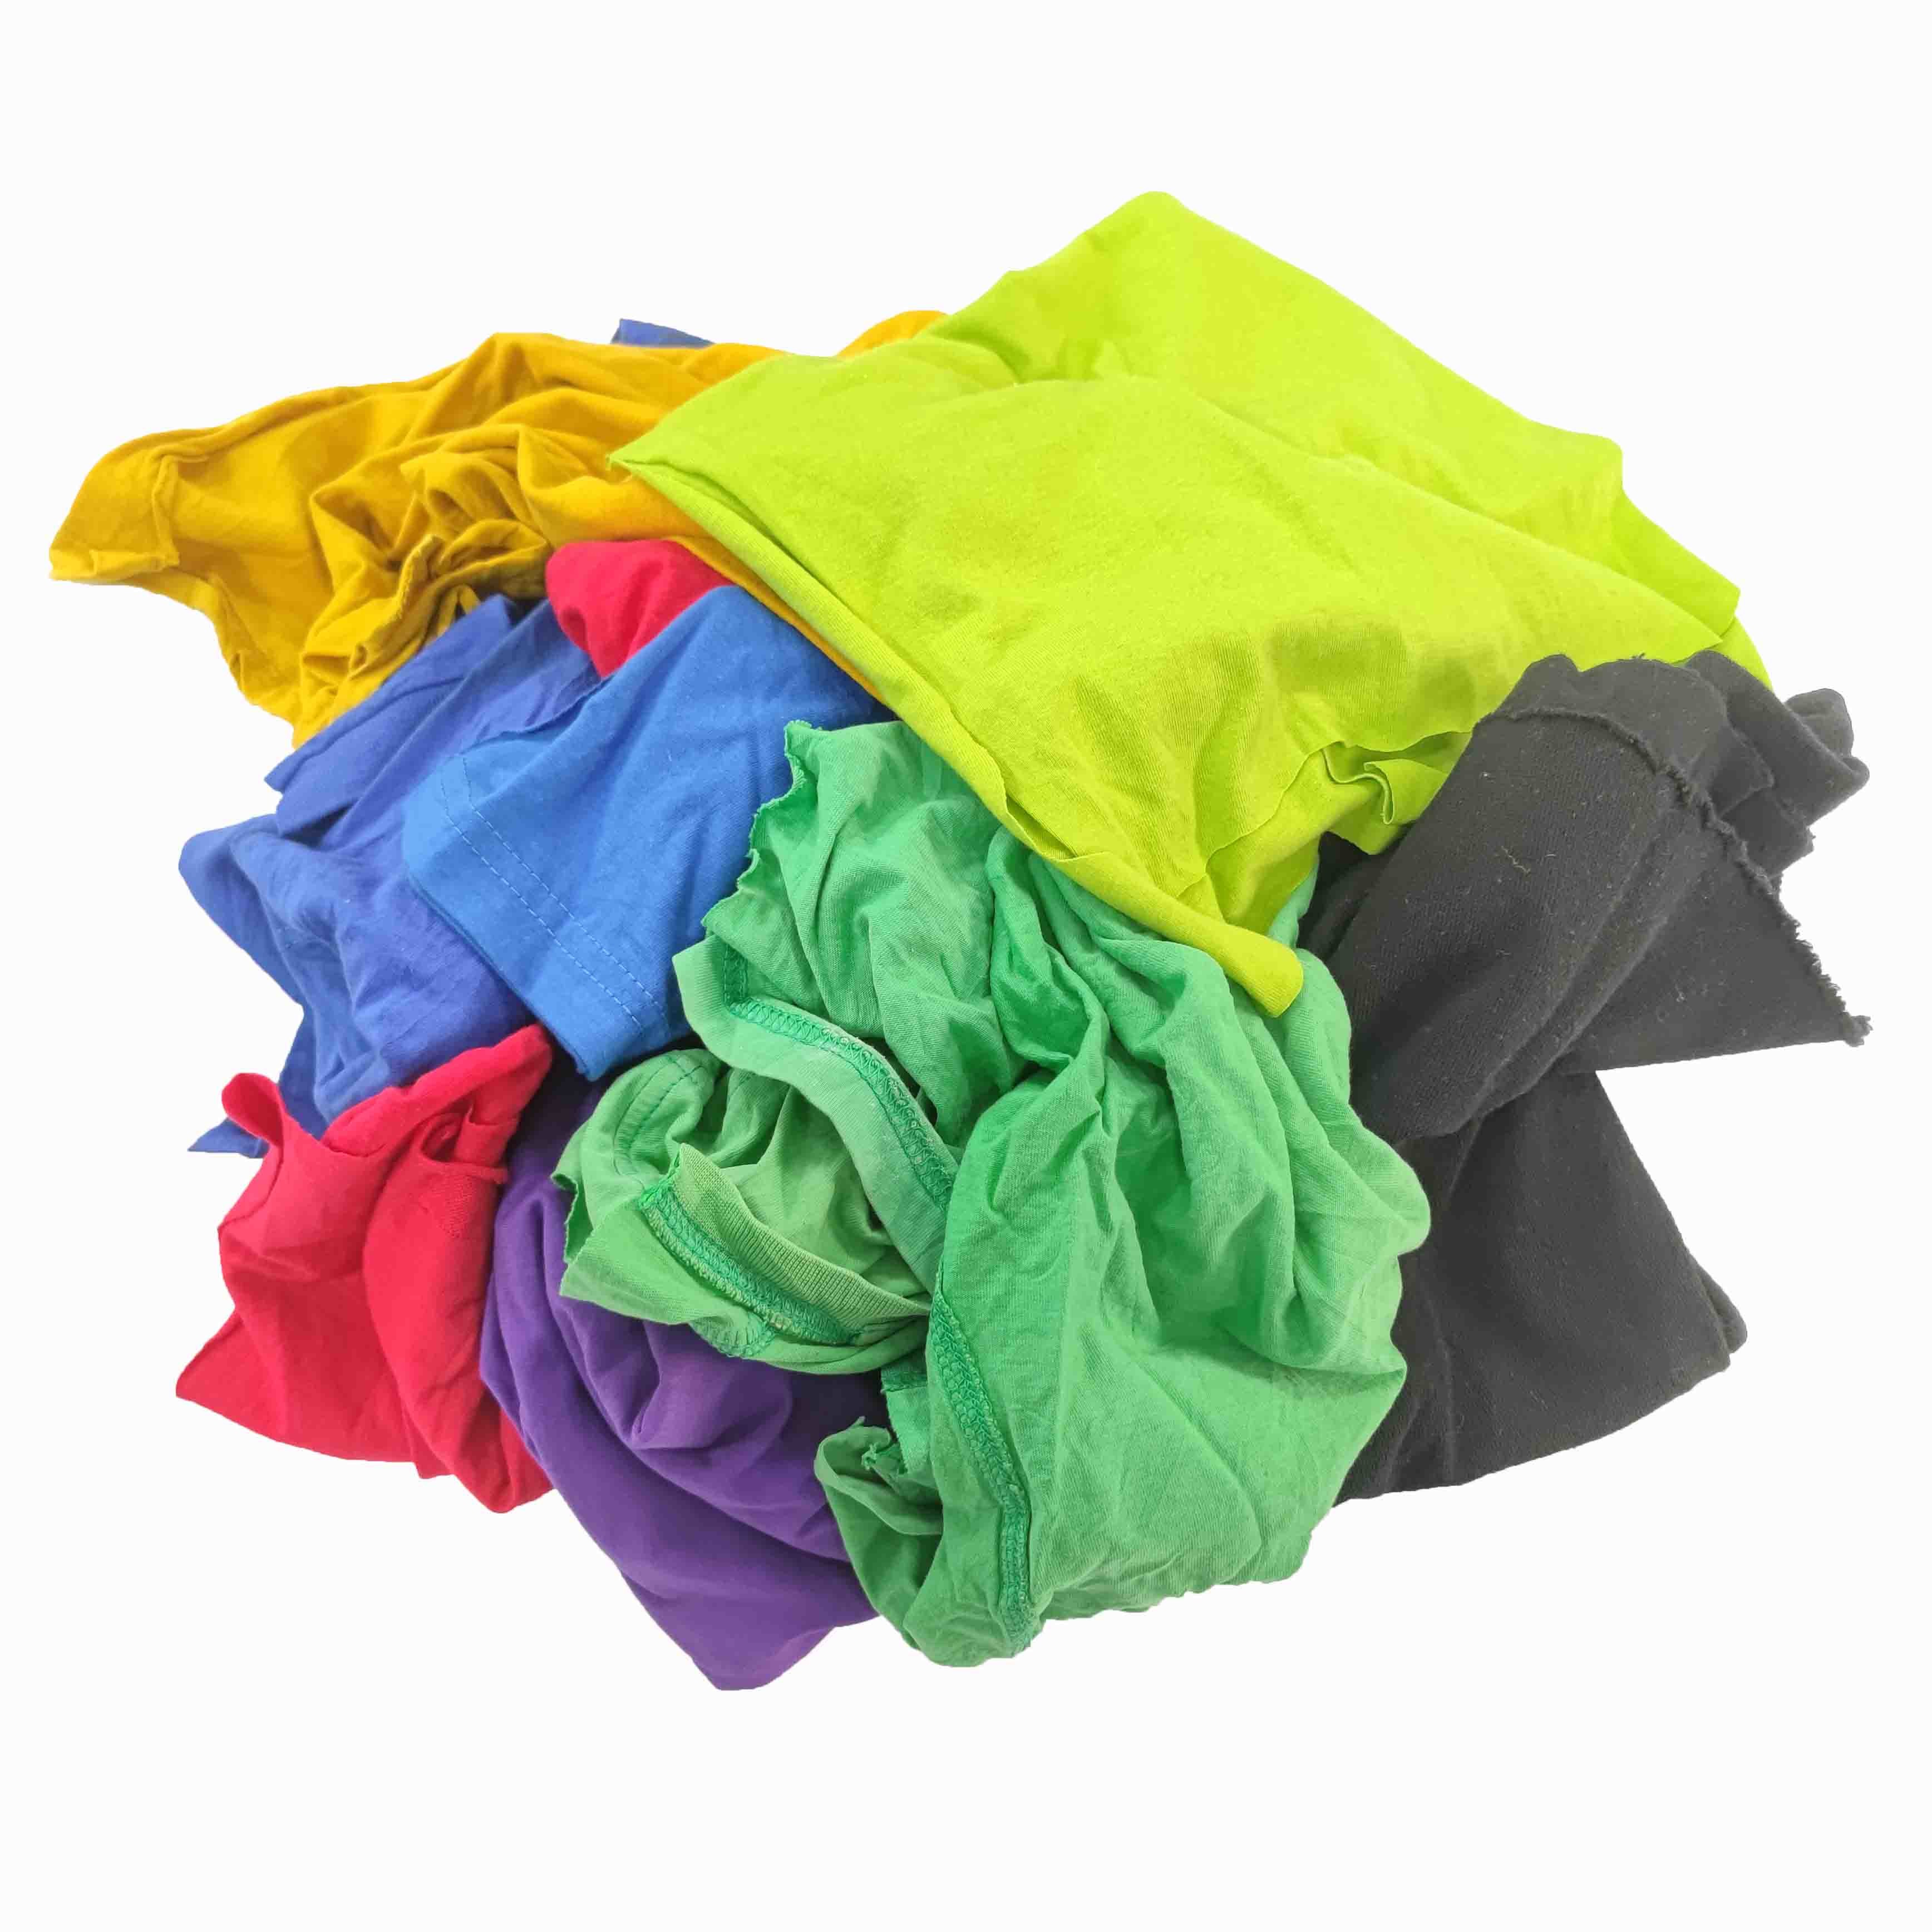 Polo Coloured Shirts Cotton Cut Mixed Cotton Rags